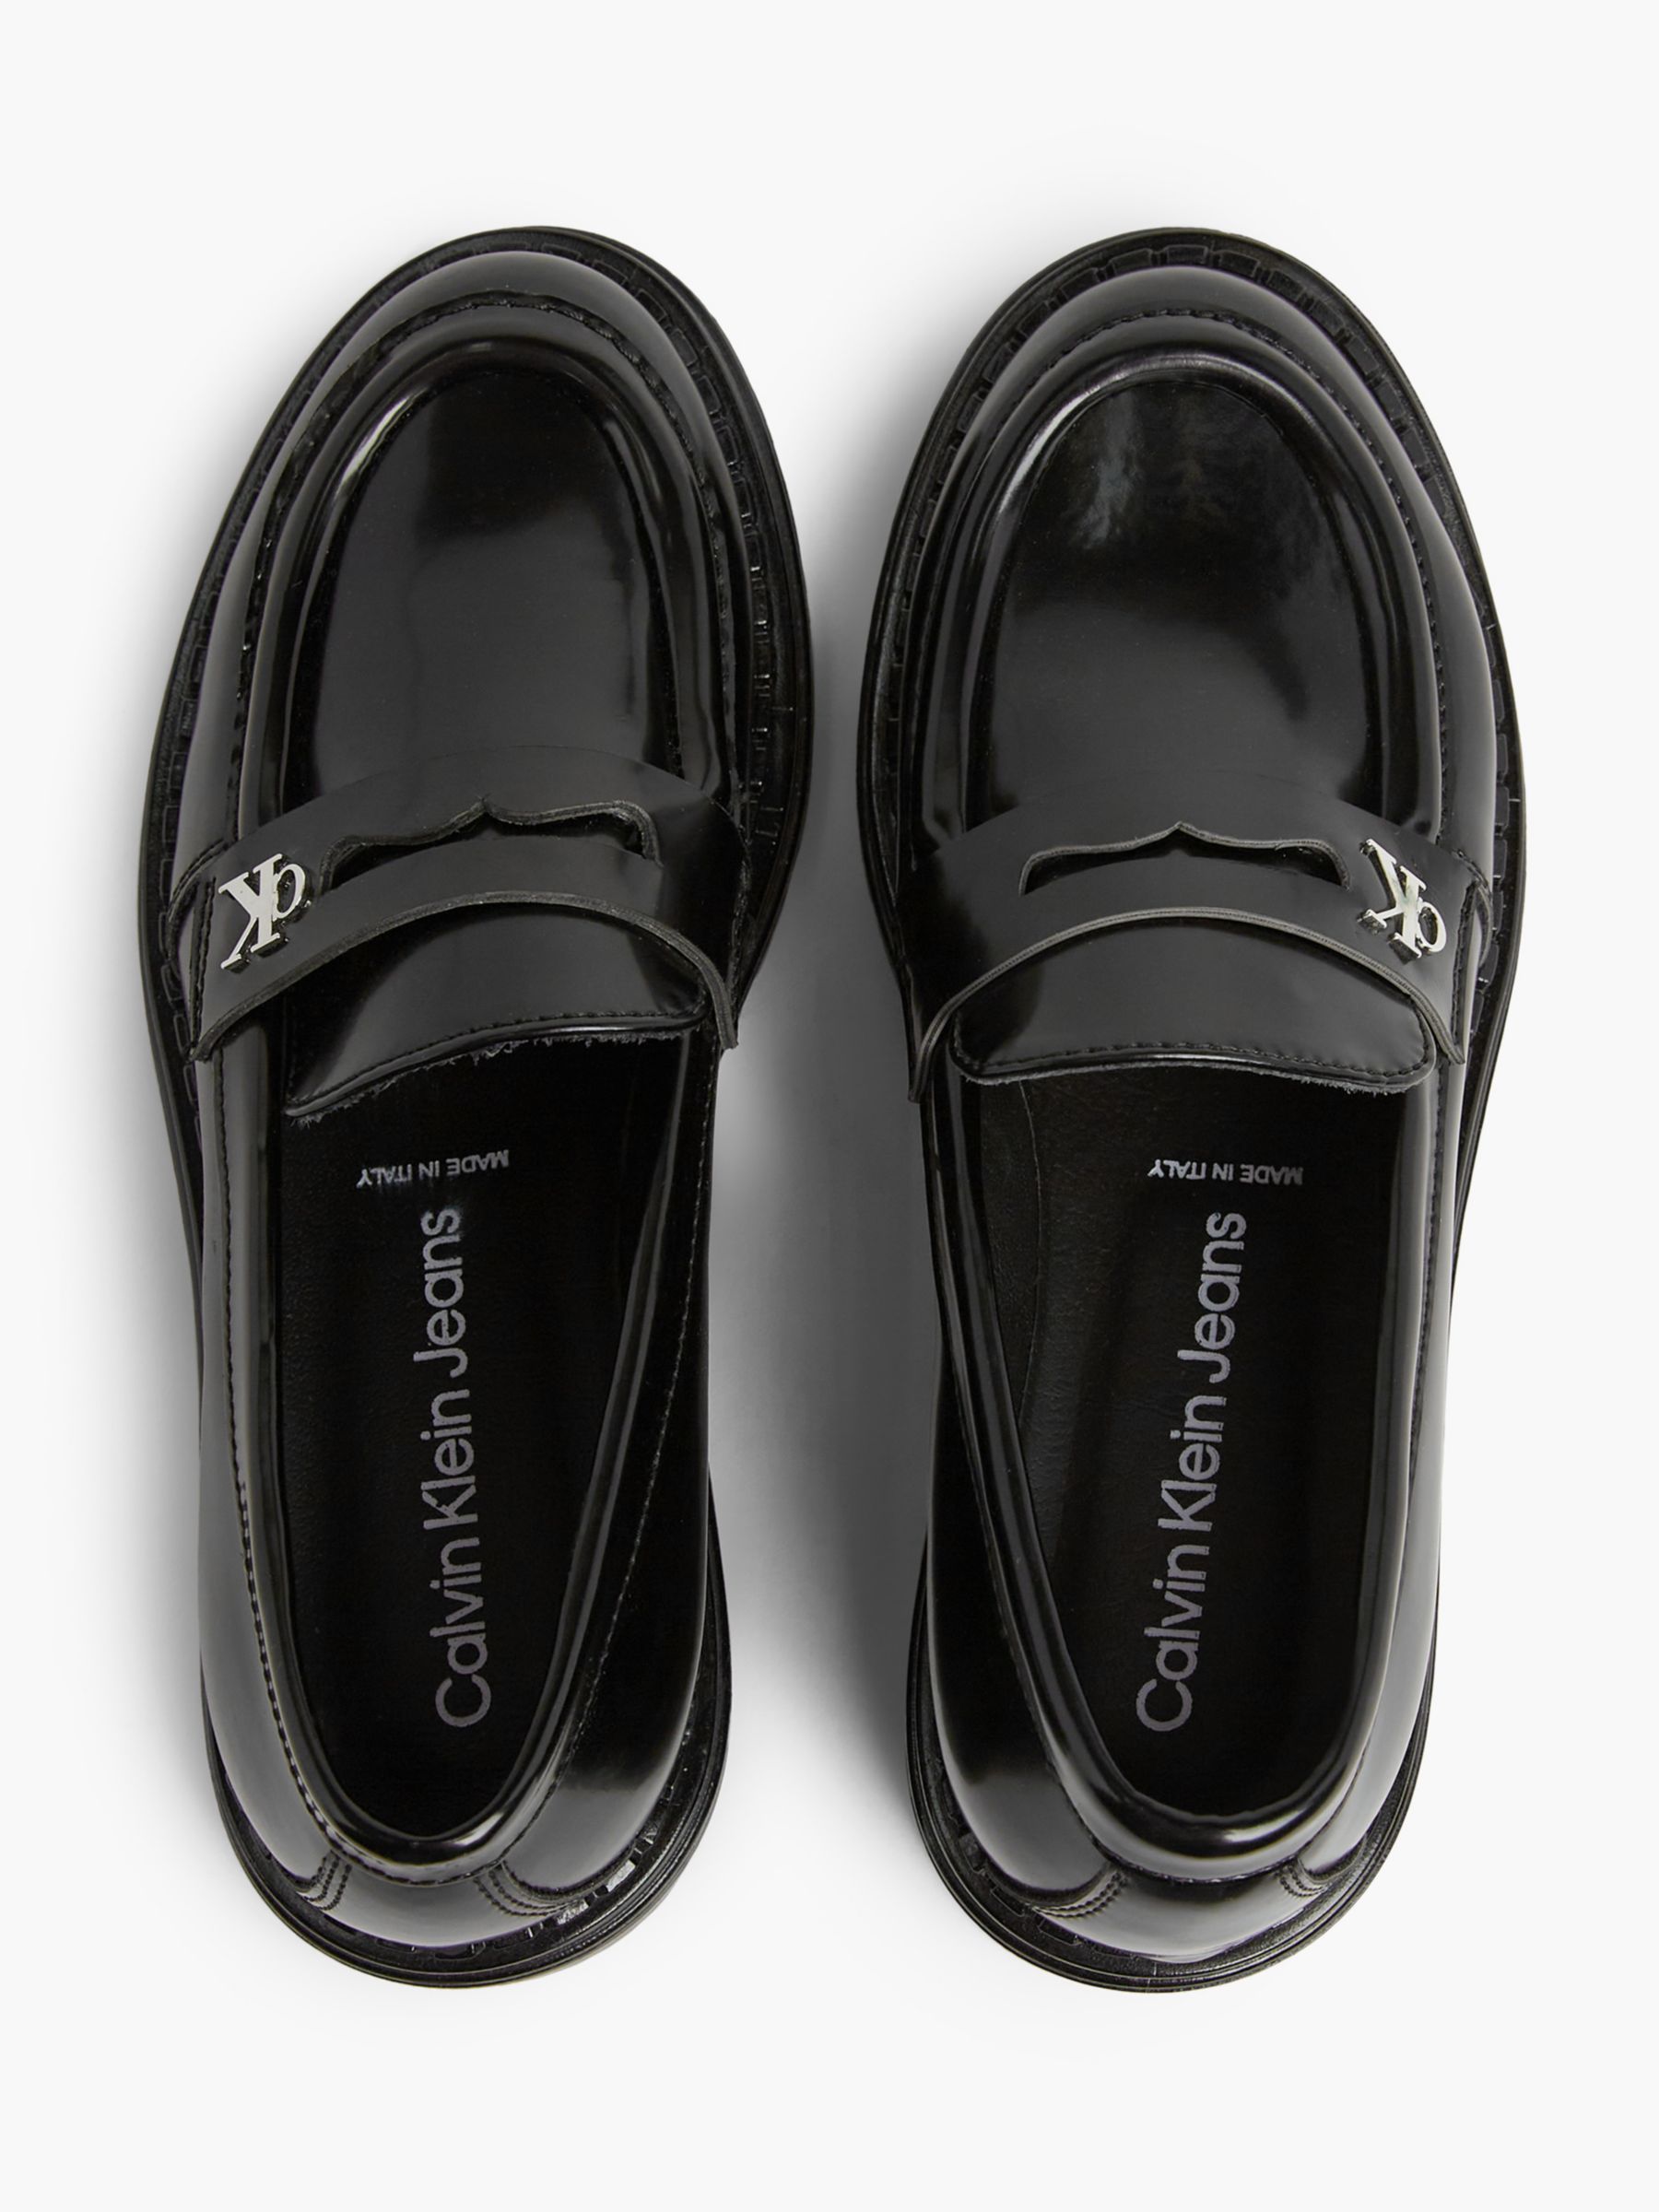 Buy Calvin Klein Kids' Chunky Loafer Shoes, Black Online at johnlewis.com